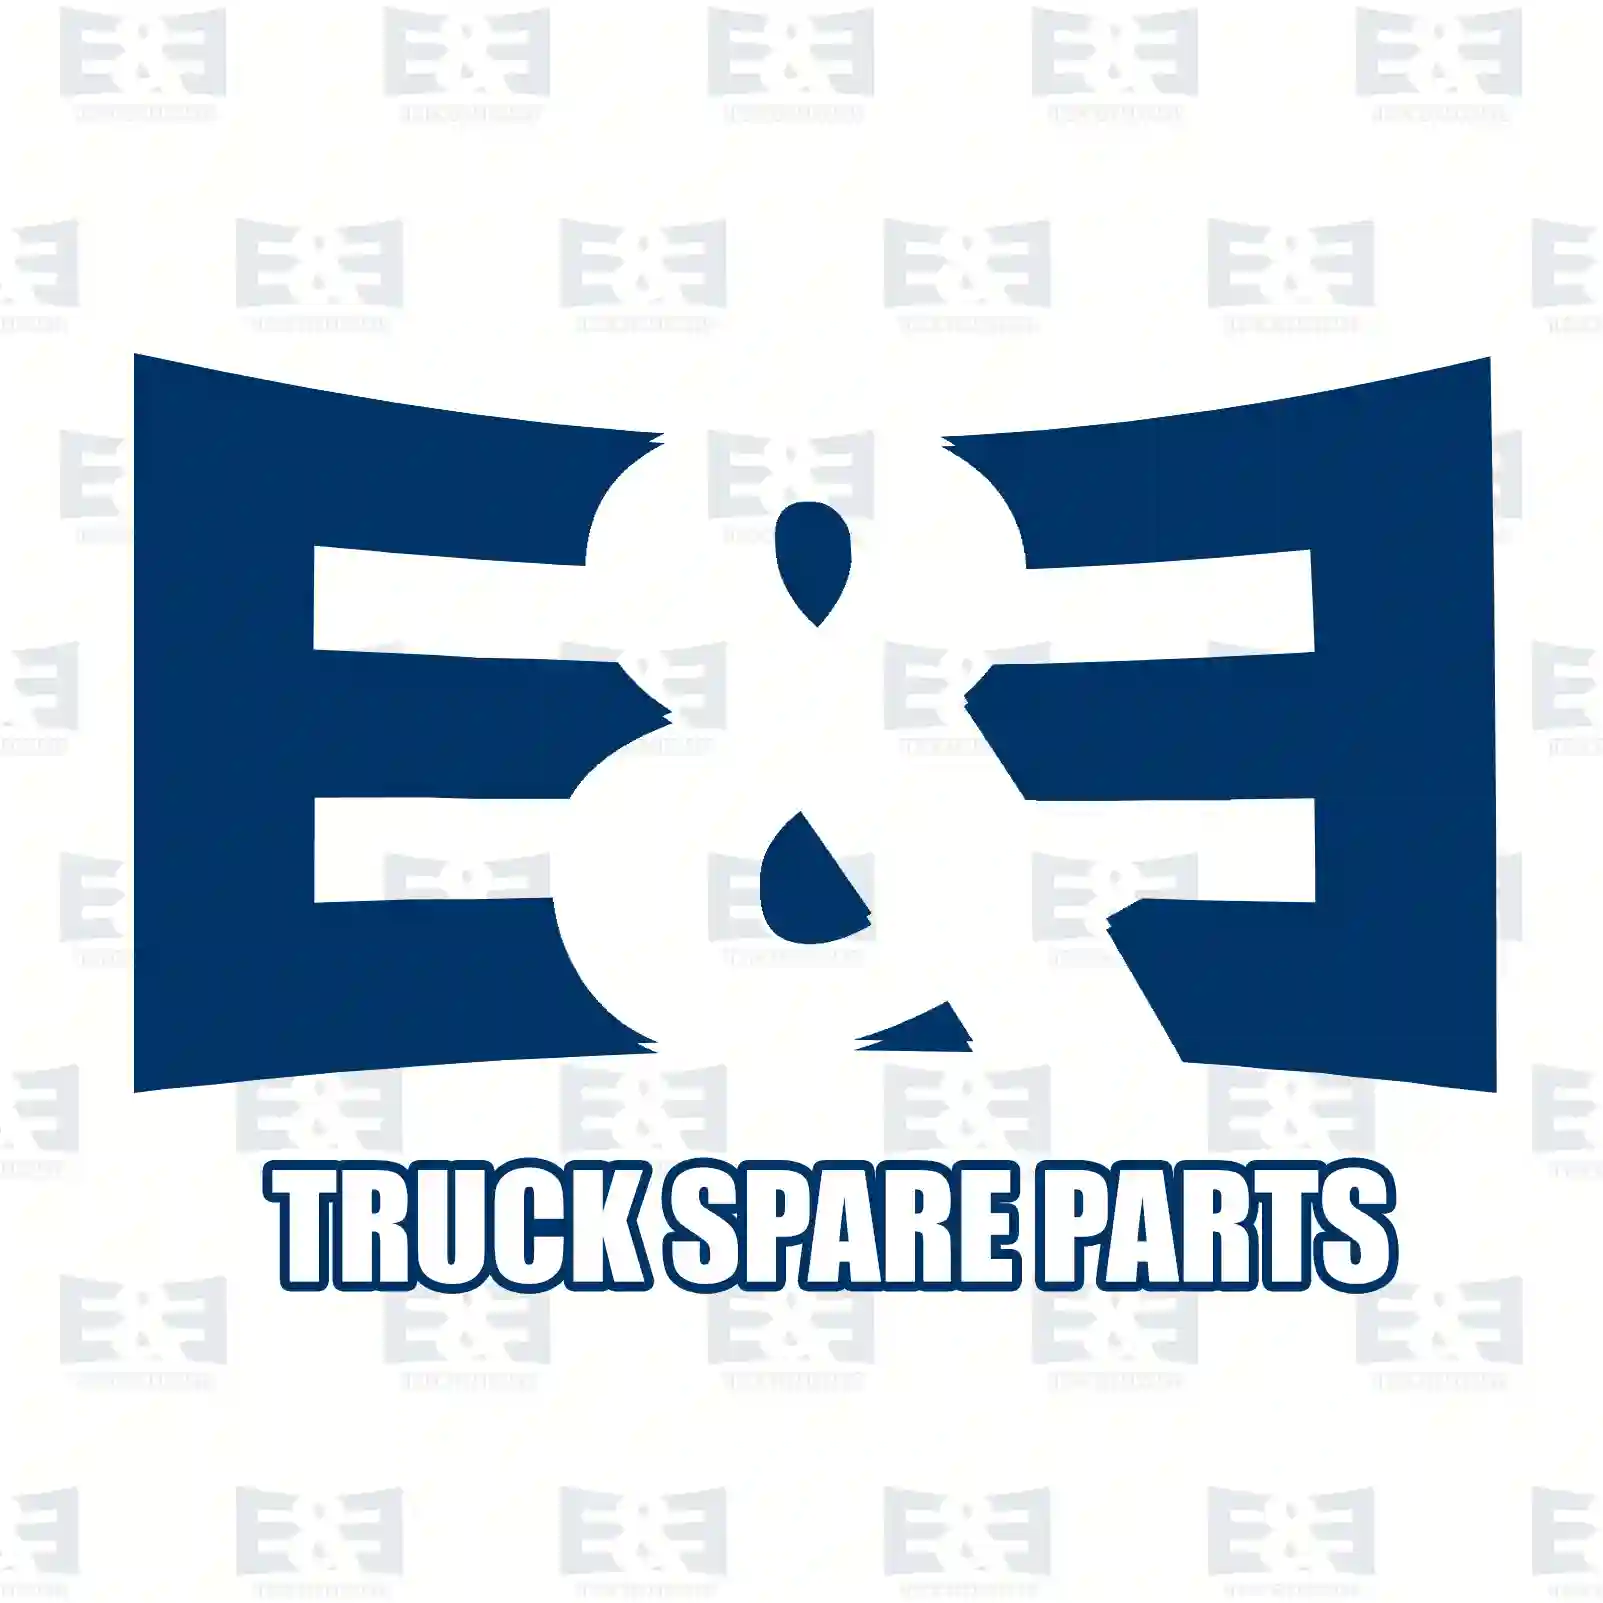 Clutch disc, 2E2288874, 312504540, 312504540A, 1527123, 1527911, 1655334, 1655336, 1655686, 1667927, 1668369, 1668674, 1861996137, 1861997137, 8112110, 8112113, 8112122 ||  2E2288874 E&E Truck Spare Parts | Truck Spare Parts, Auotomotive Spare Parts Clutch disc, 2E2288874, 312504540, 312504540A, 1527123, 1527911, 1655334, 1655336, 1655686, 1667927, 1668369, 1668674, 1861996137, 1861997137, 8112110, 8112113, 8112122 ||  2E2288874 E&E Truck Spare Parts | Truck Spare Parts, Auotomotive Spare Parts